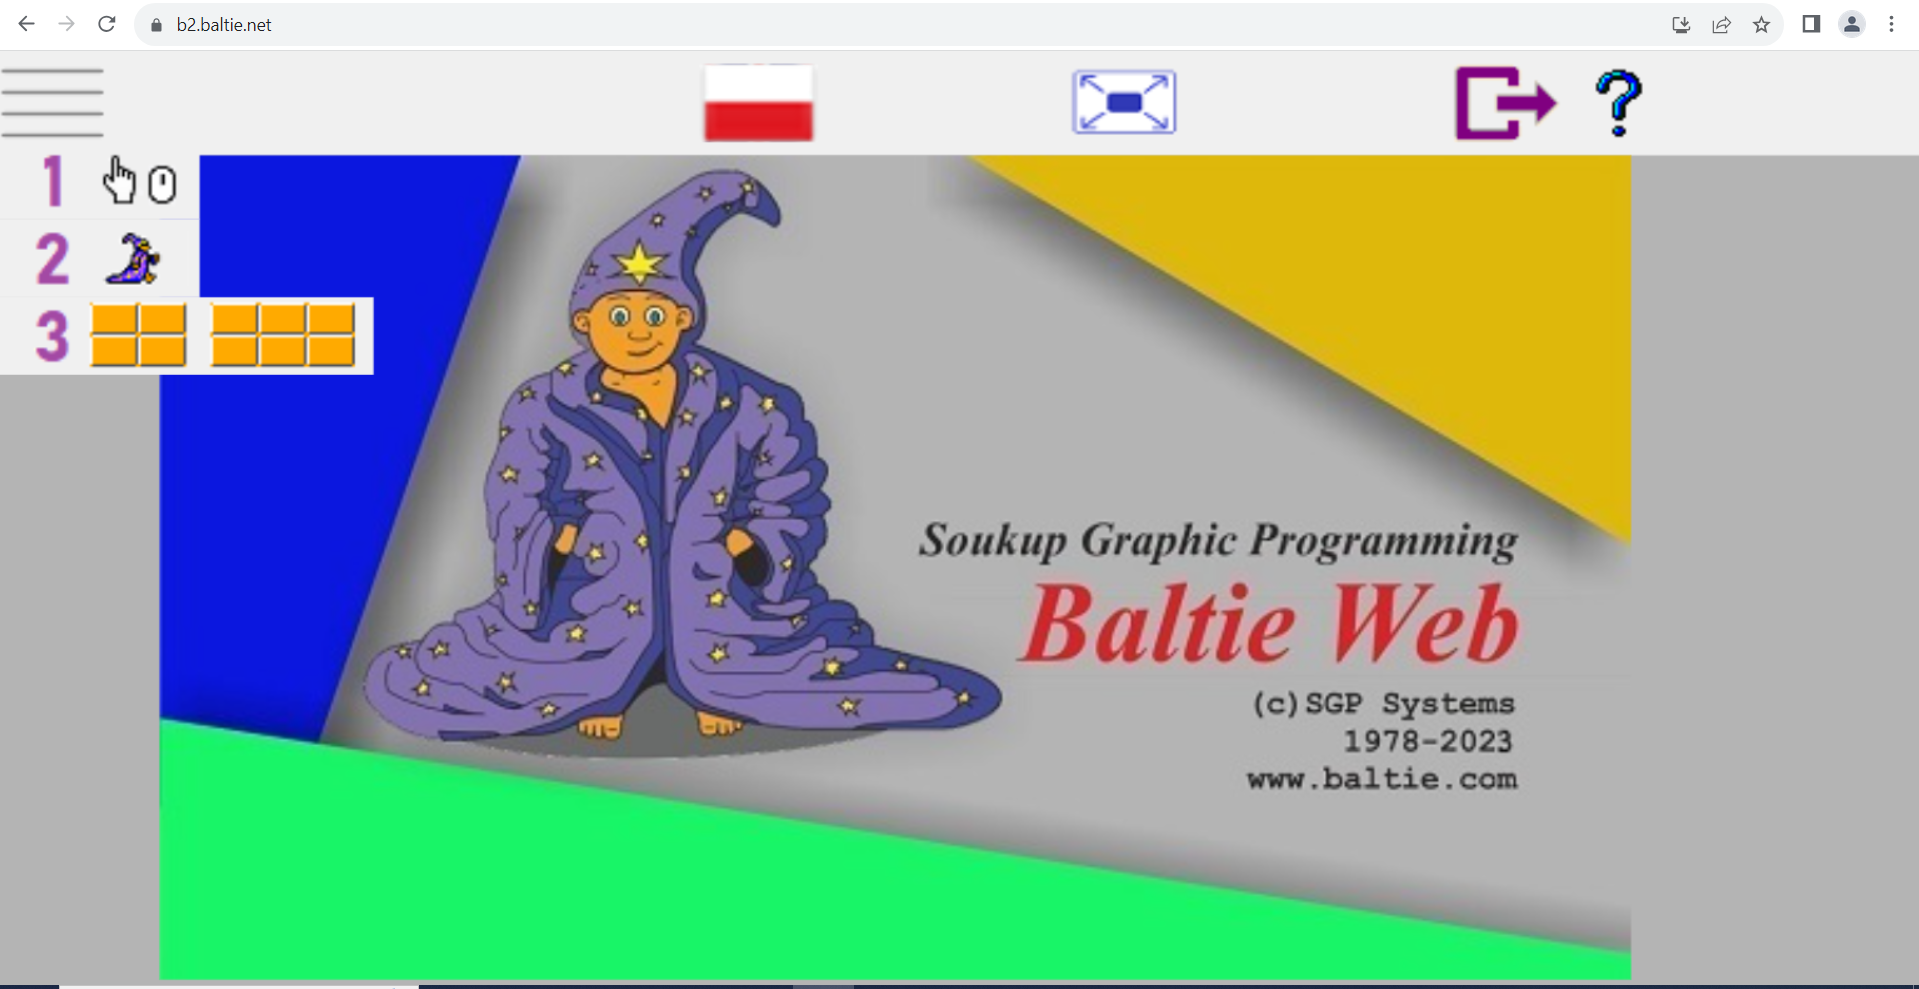 baltie_web